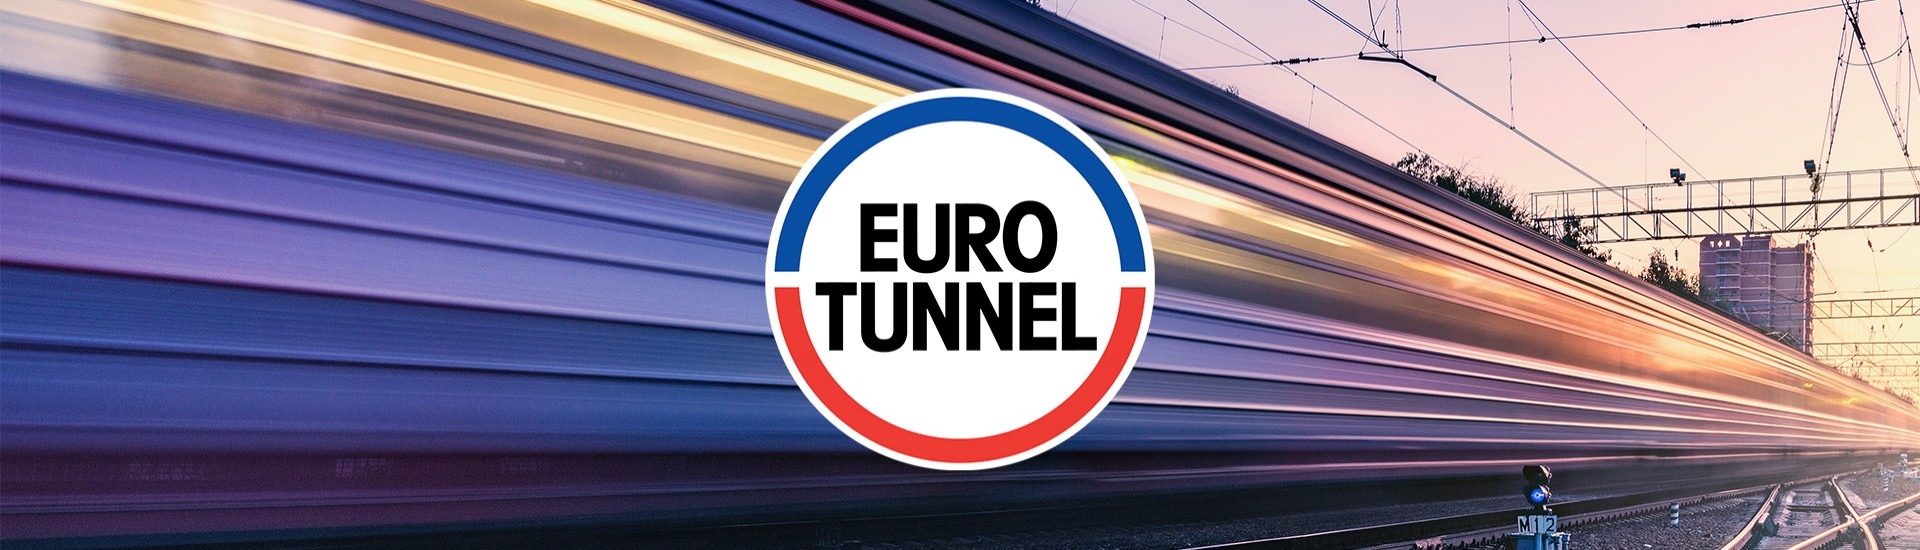 Eurotunnel Get Safer Seminar